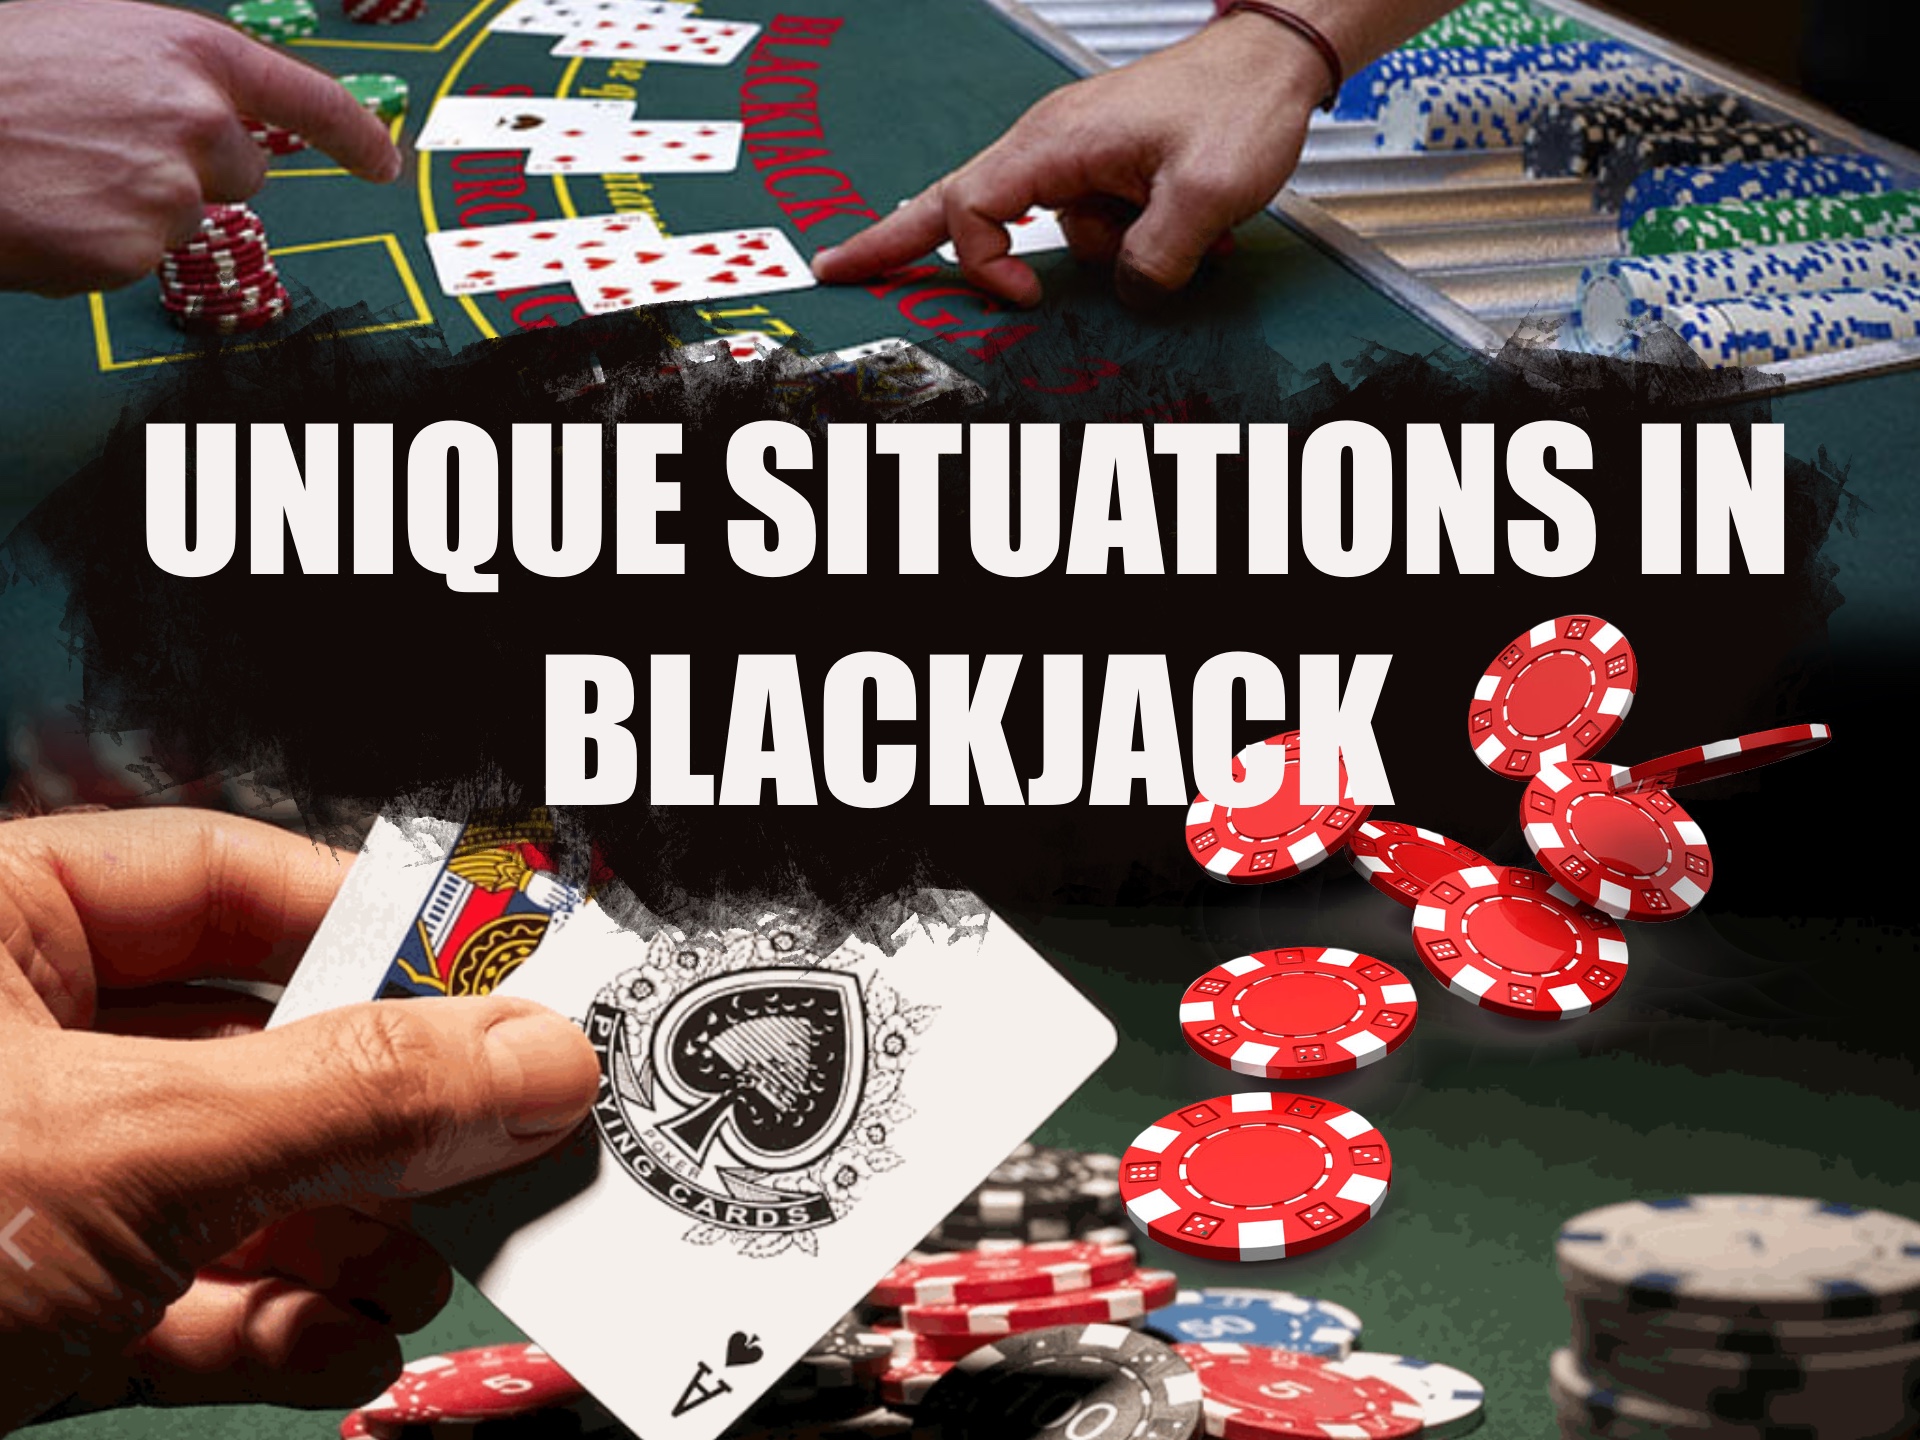 unique situations in blackjack: Dealer Gets 10, Insurance, Dead Hand